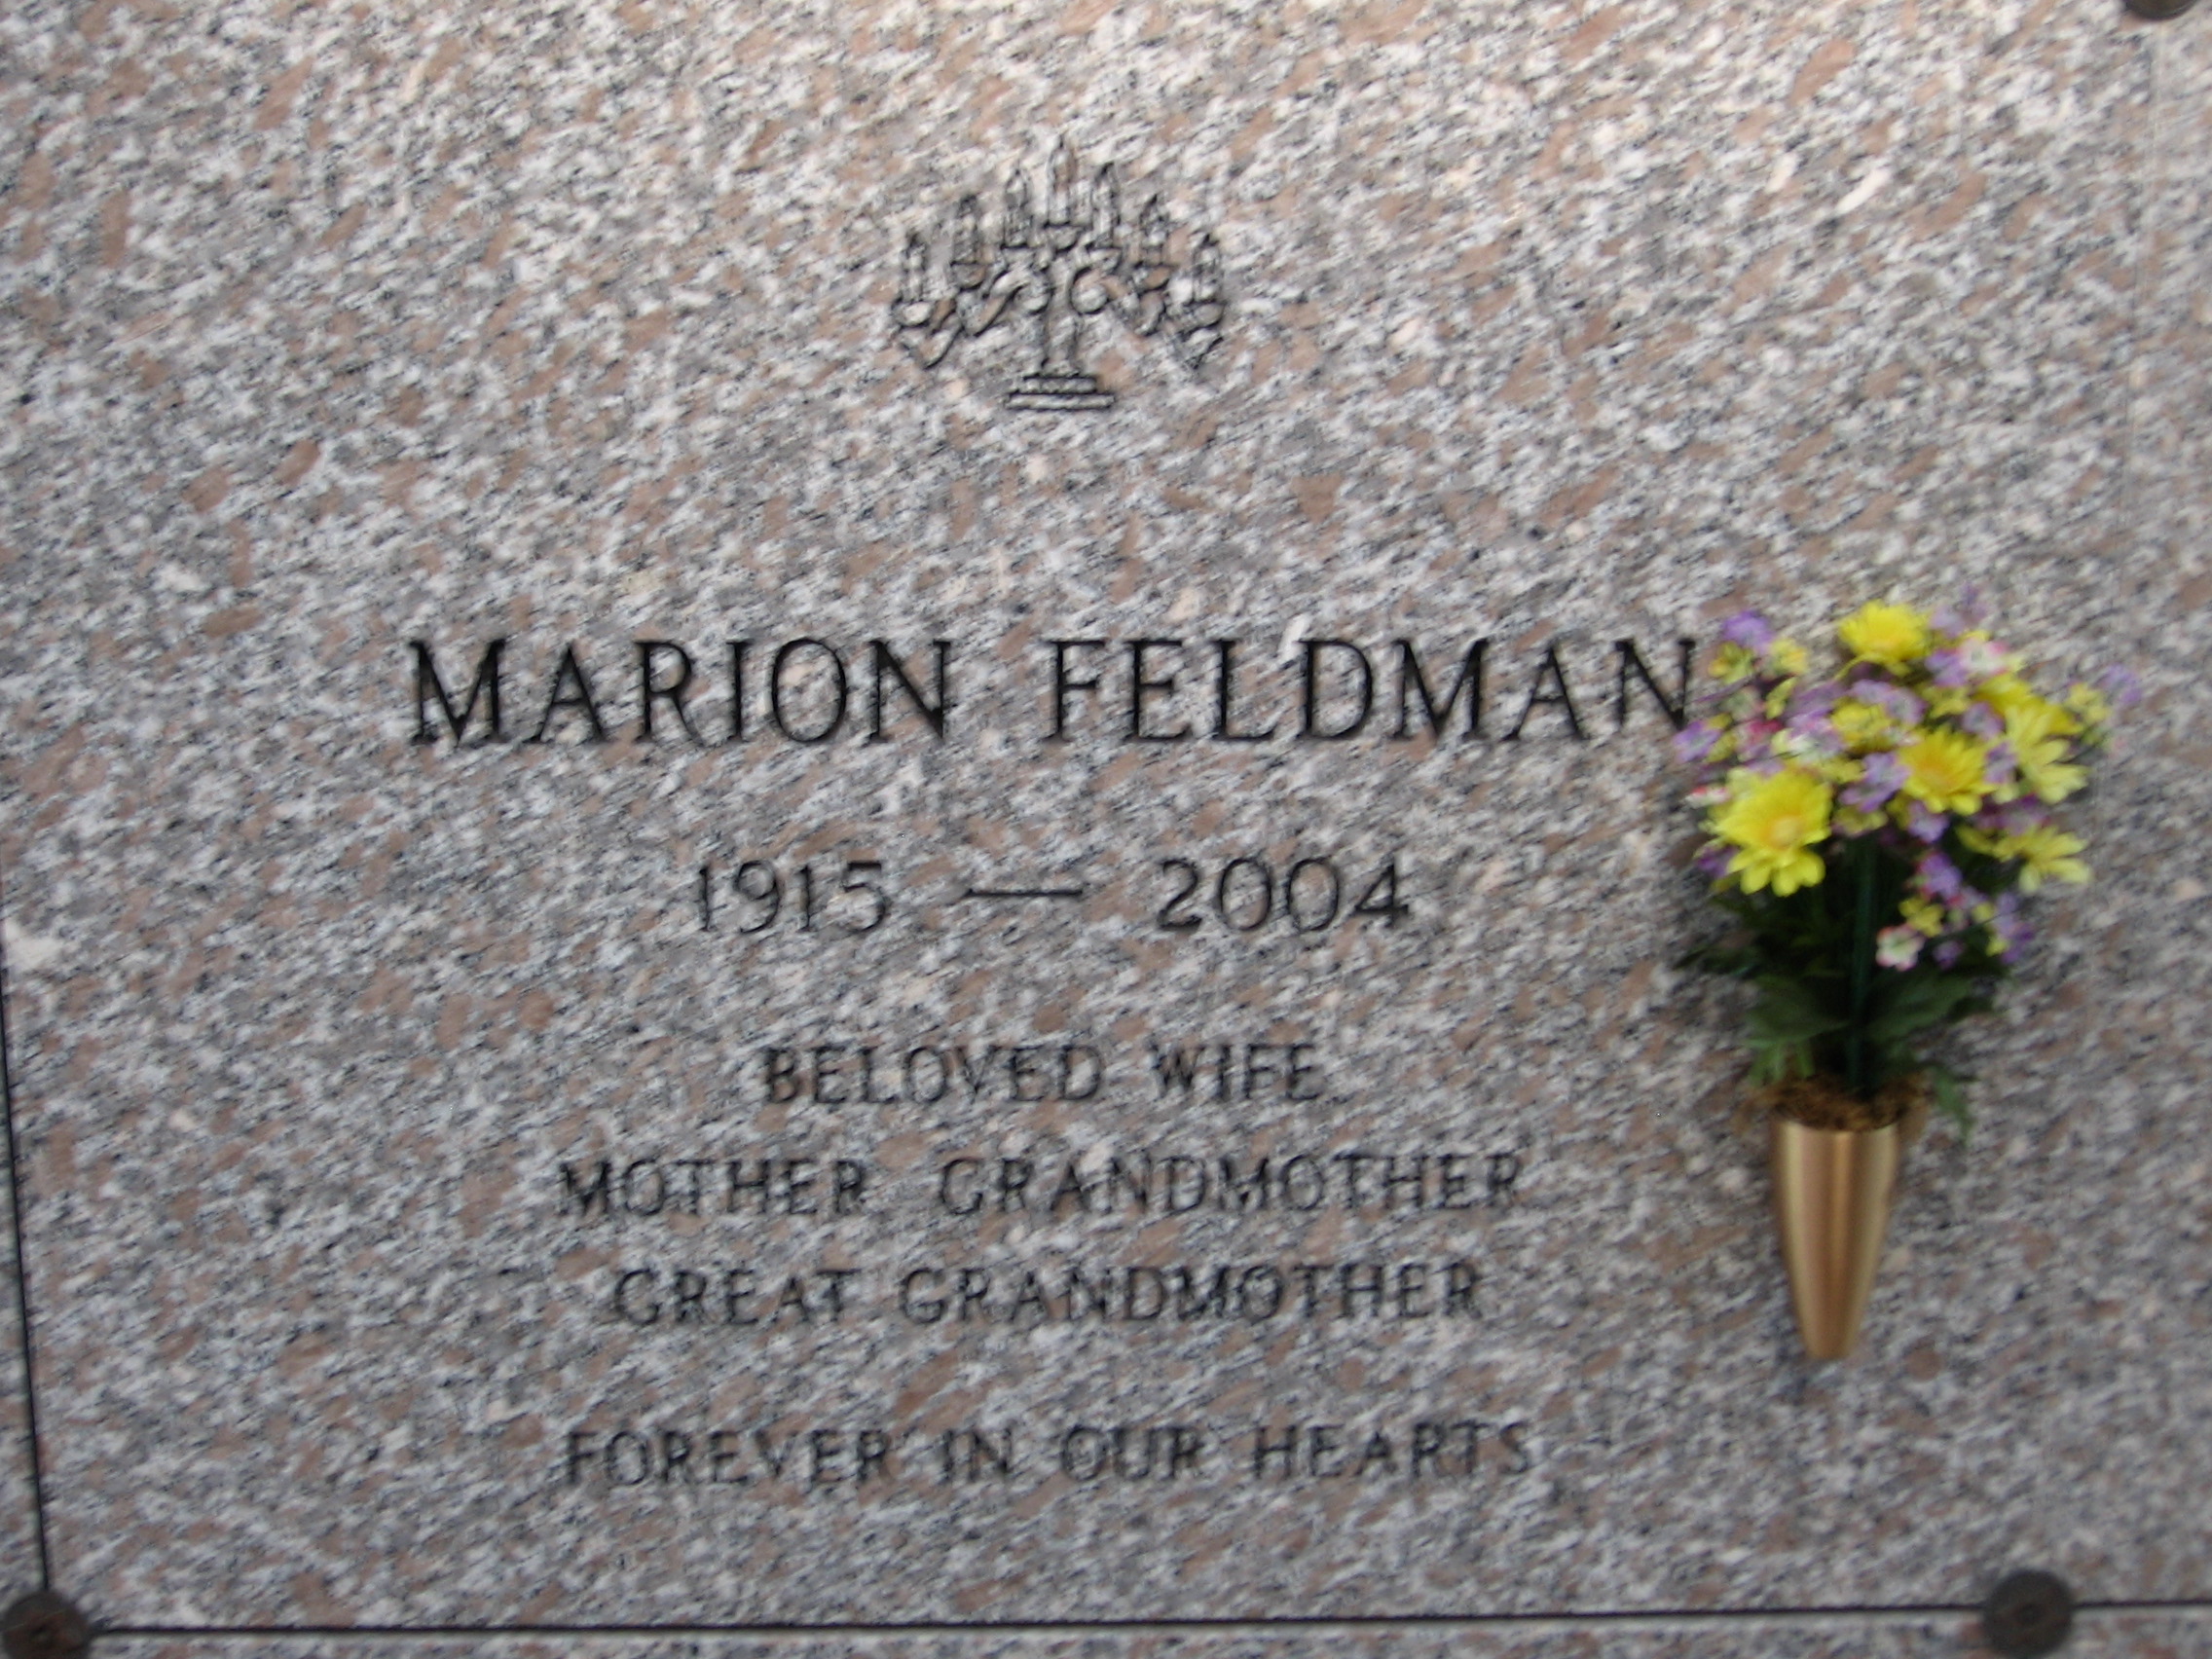 Marion Feldman